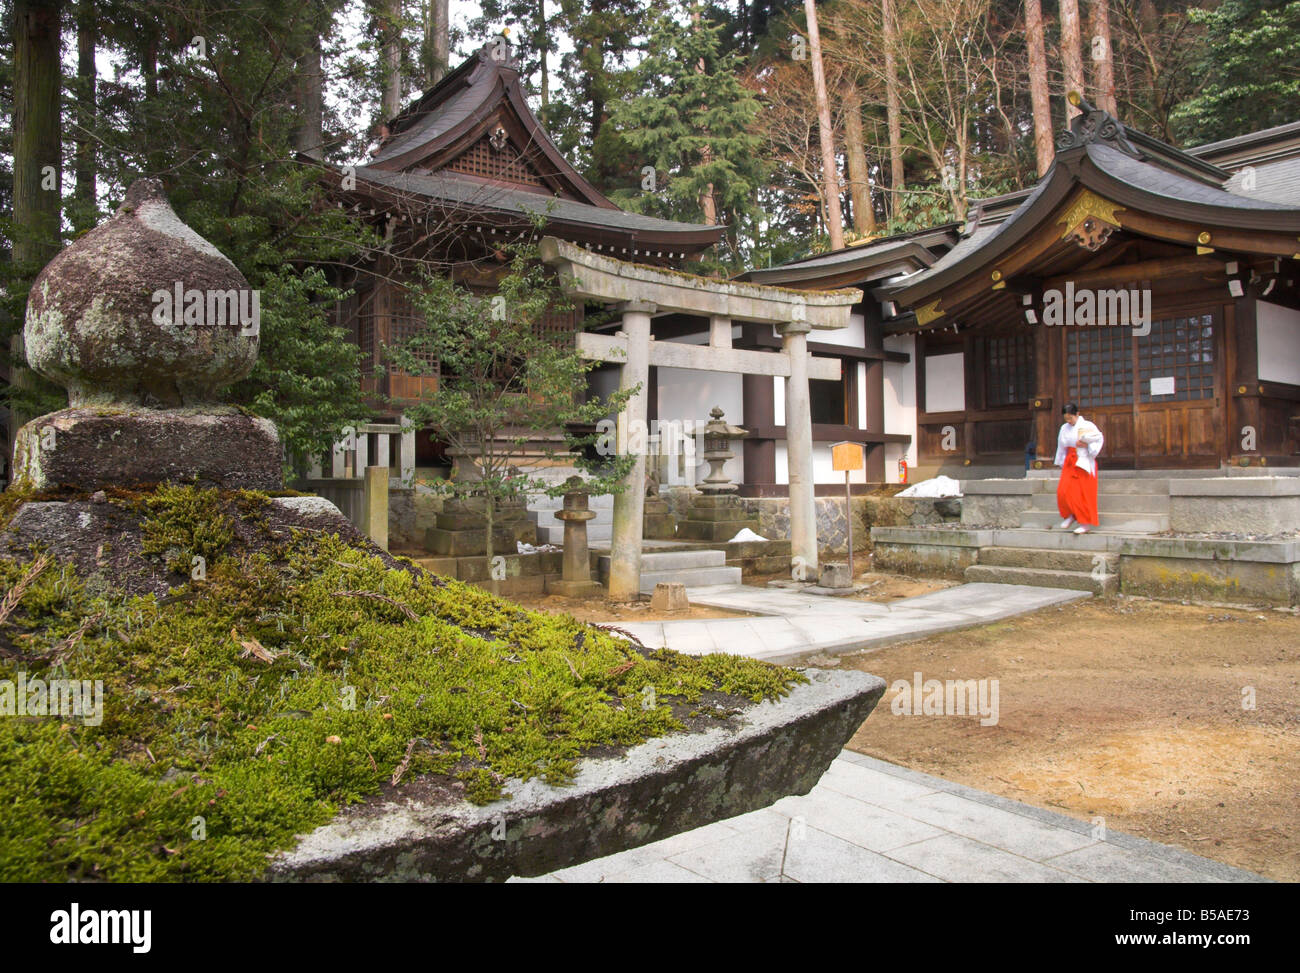 Courtyard with temple buildings and female priest, Sakurayama Nikko Kan temple, Takayama, Hida District, Honshu, Japan Stock Photo